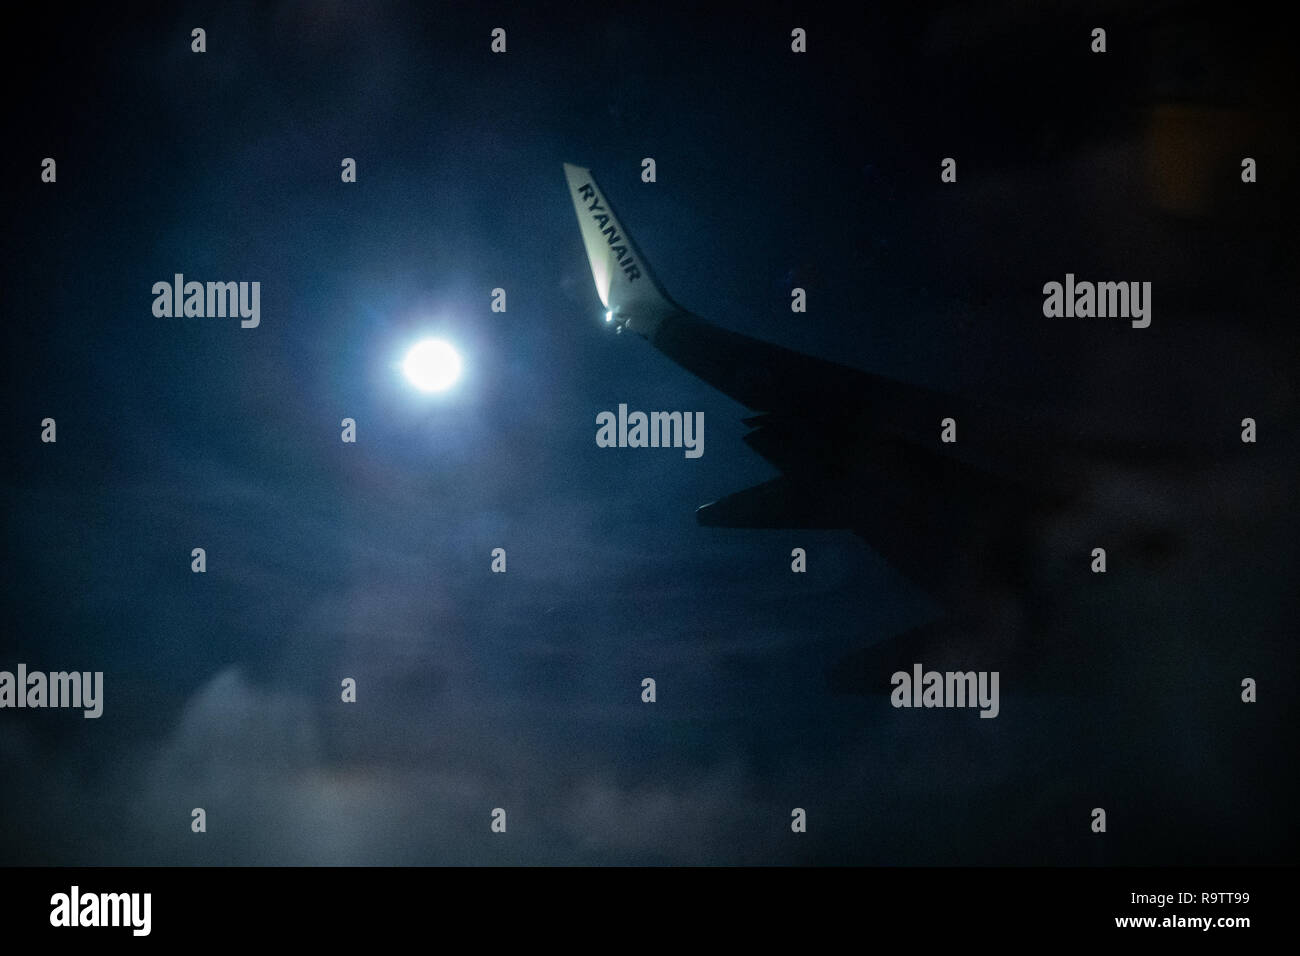 Ryanair punta ala accesa in un cielo di notte da una luna piena Foto Stock